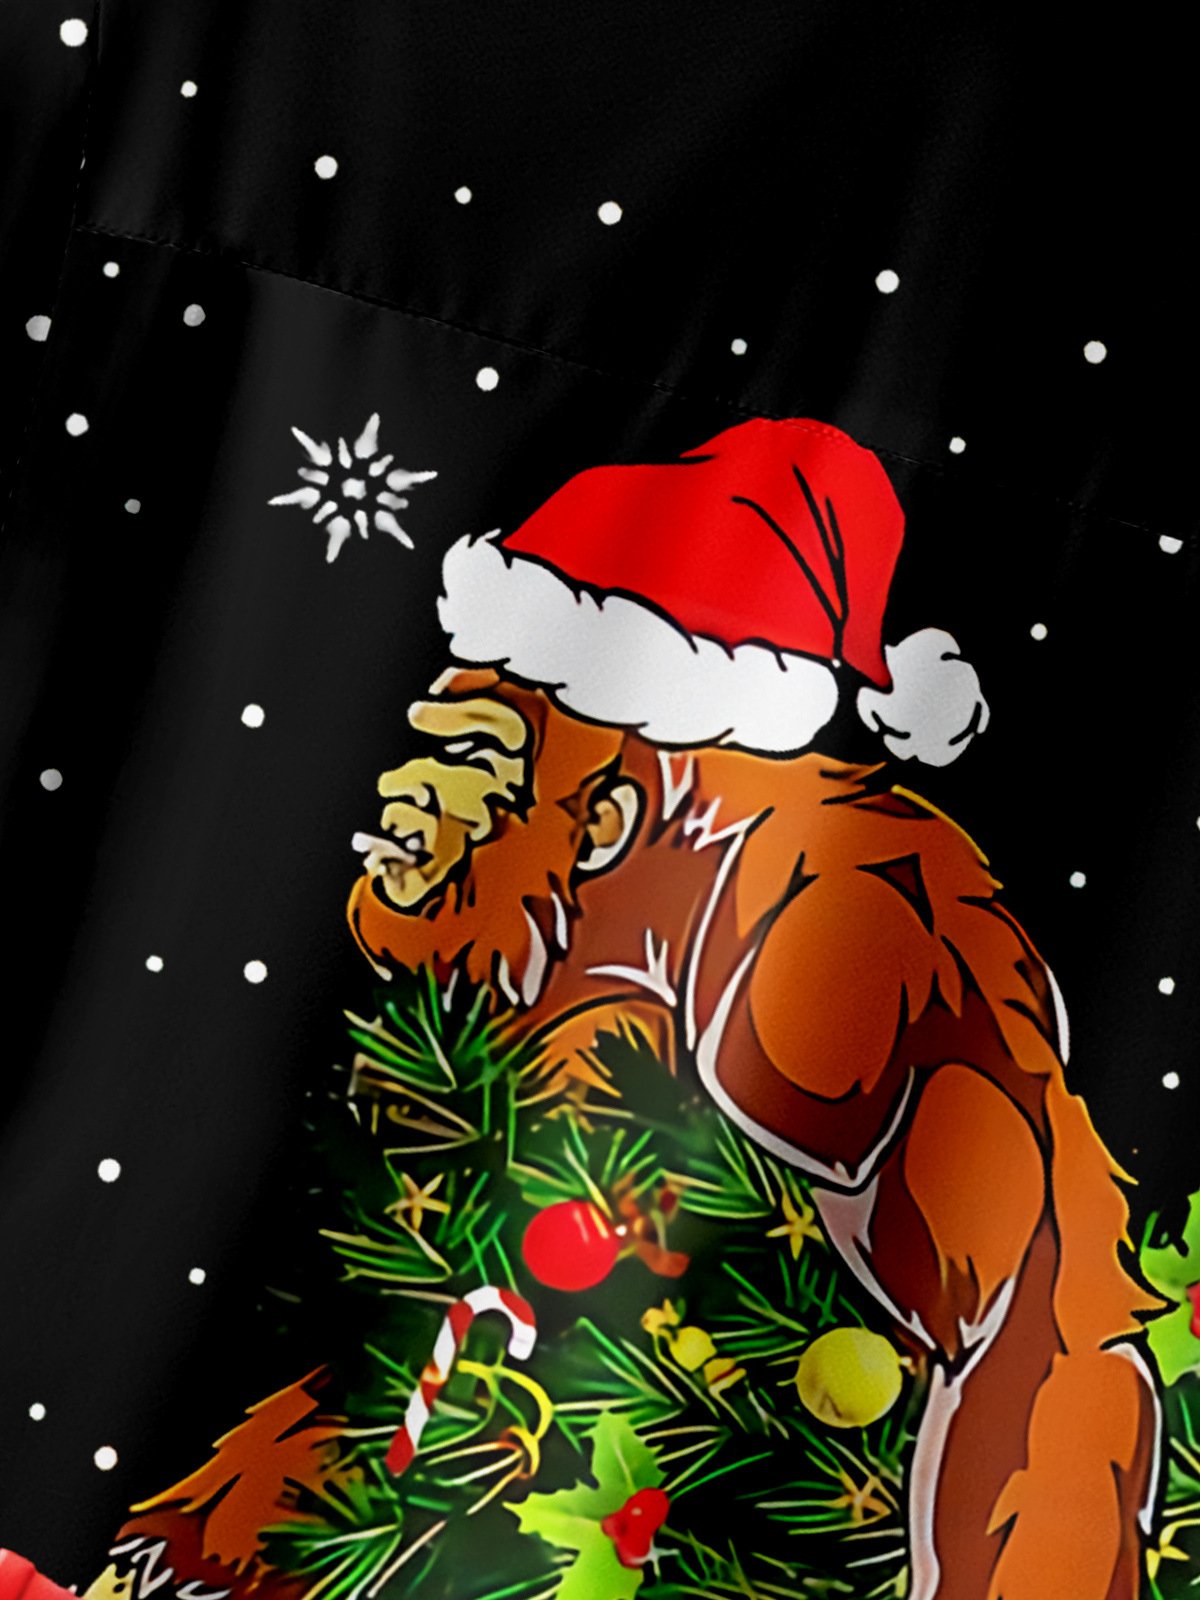 Christmas Bigfoot Chest Pocket Short Sleeve Casual Shirt